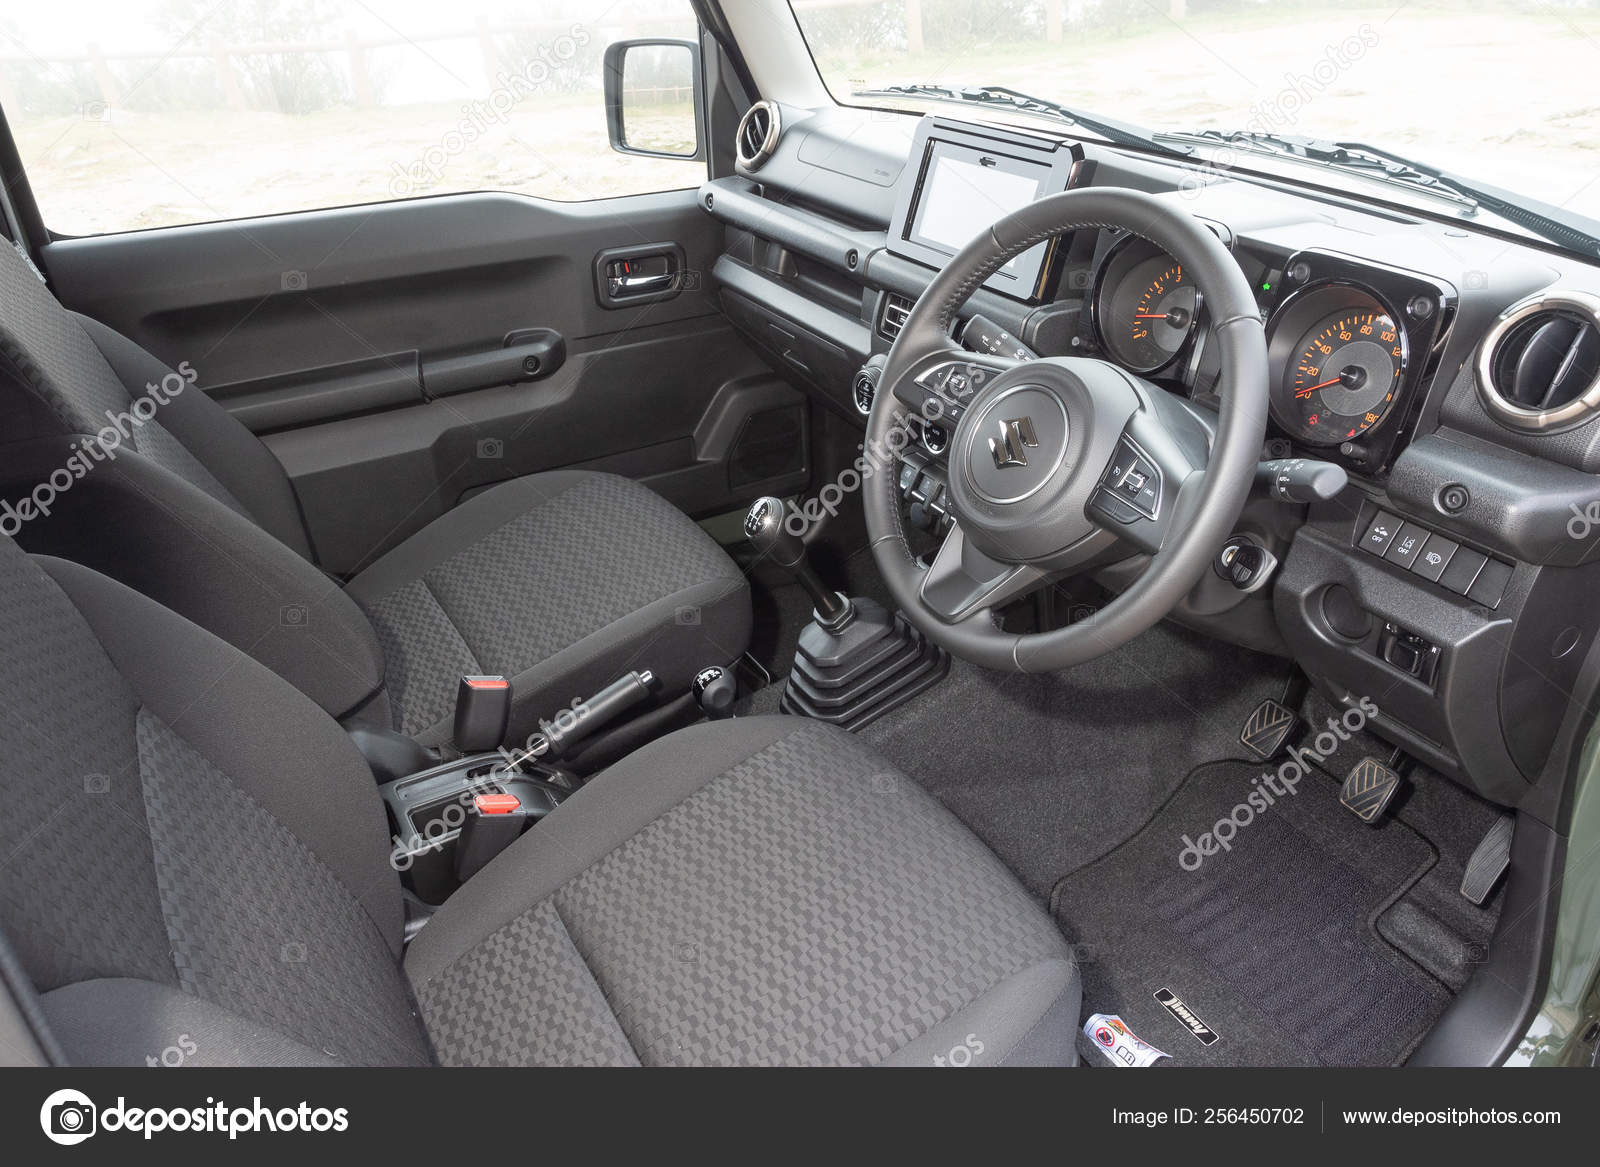 Suzuki Jimny Interior Stock Editorial Photo C Teddyleung